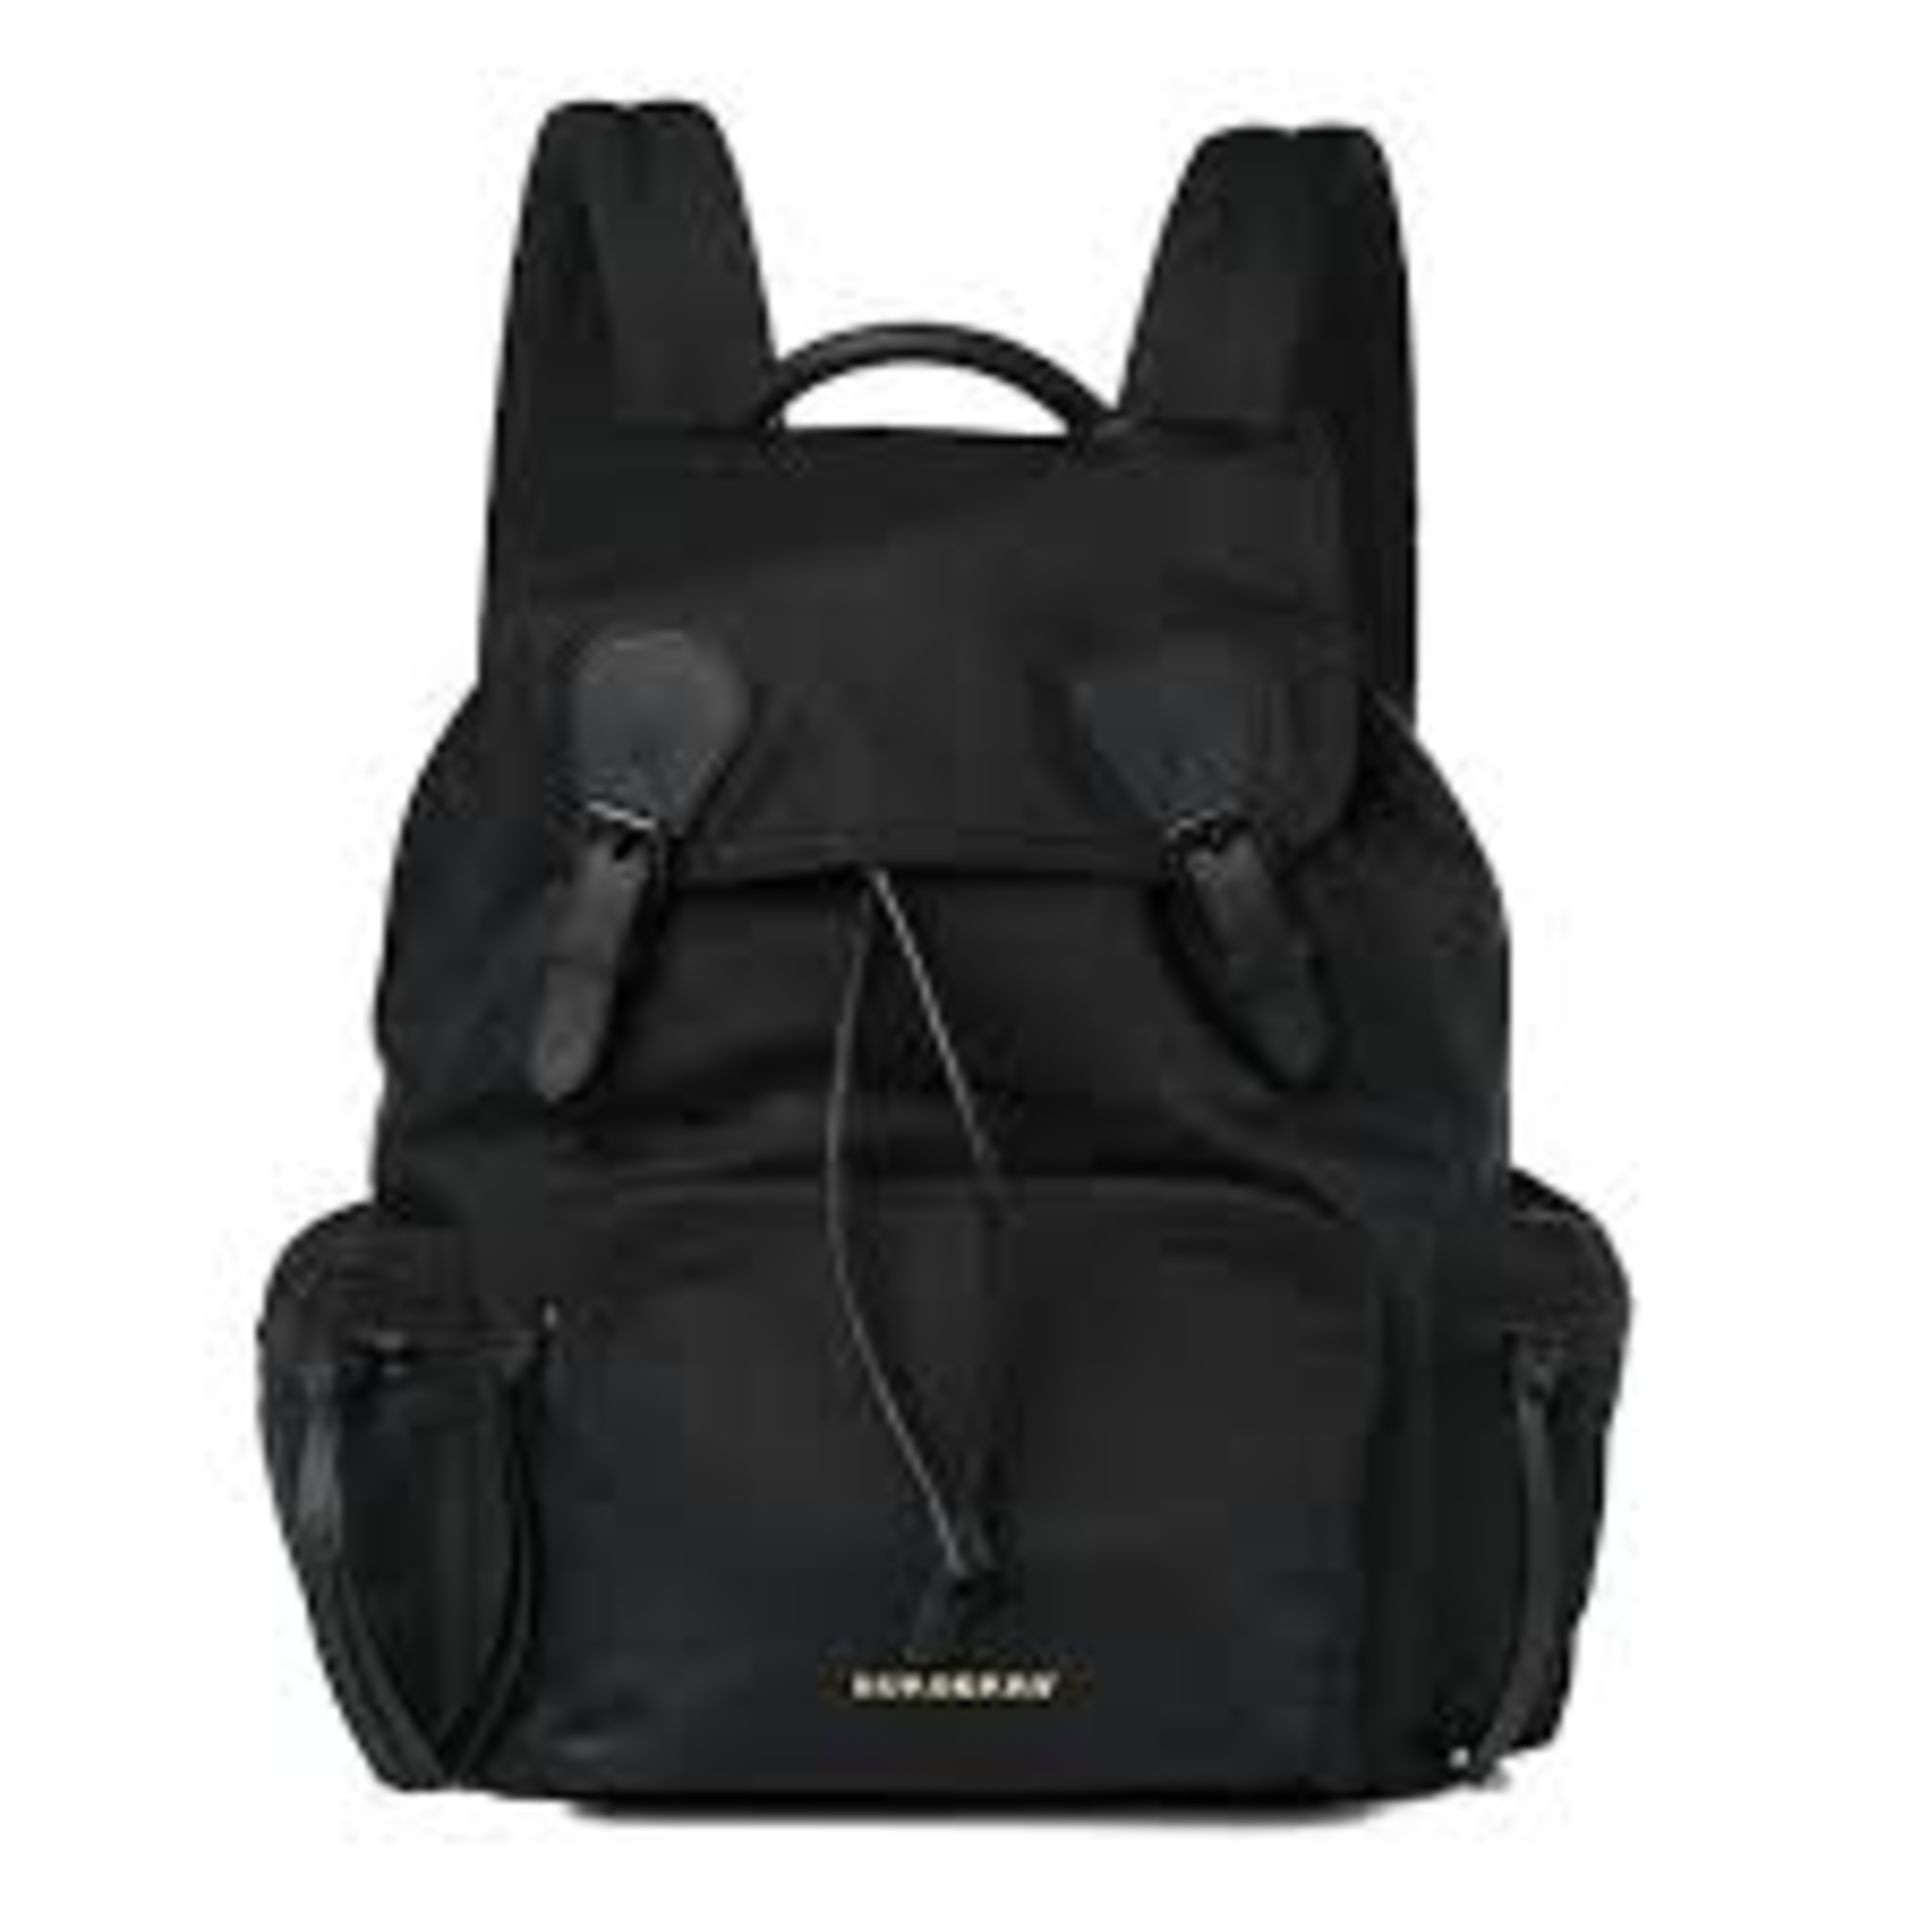 BURBERRY black nylon backpack. Personalised EB. 35x35cm - Image 4 of 12